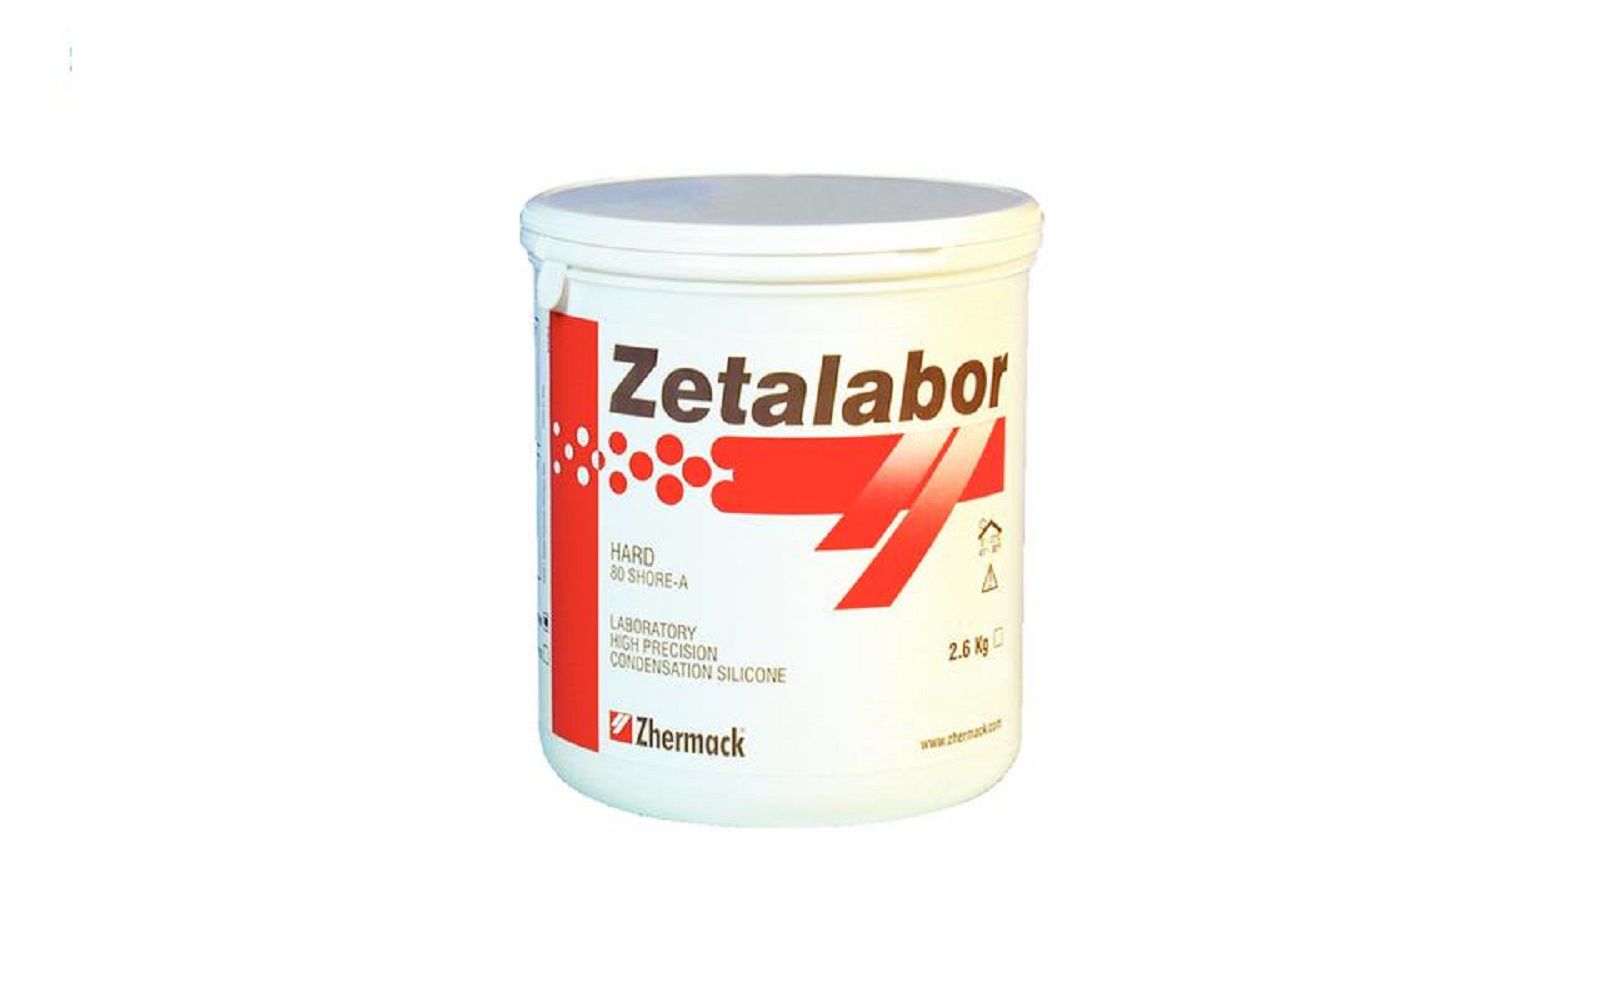 Zetalabor laboratory silicone - zhermack incorporated